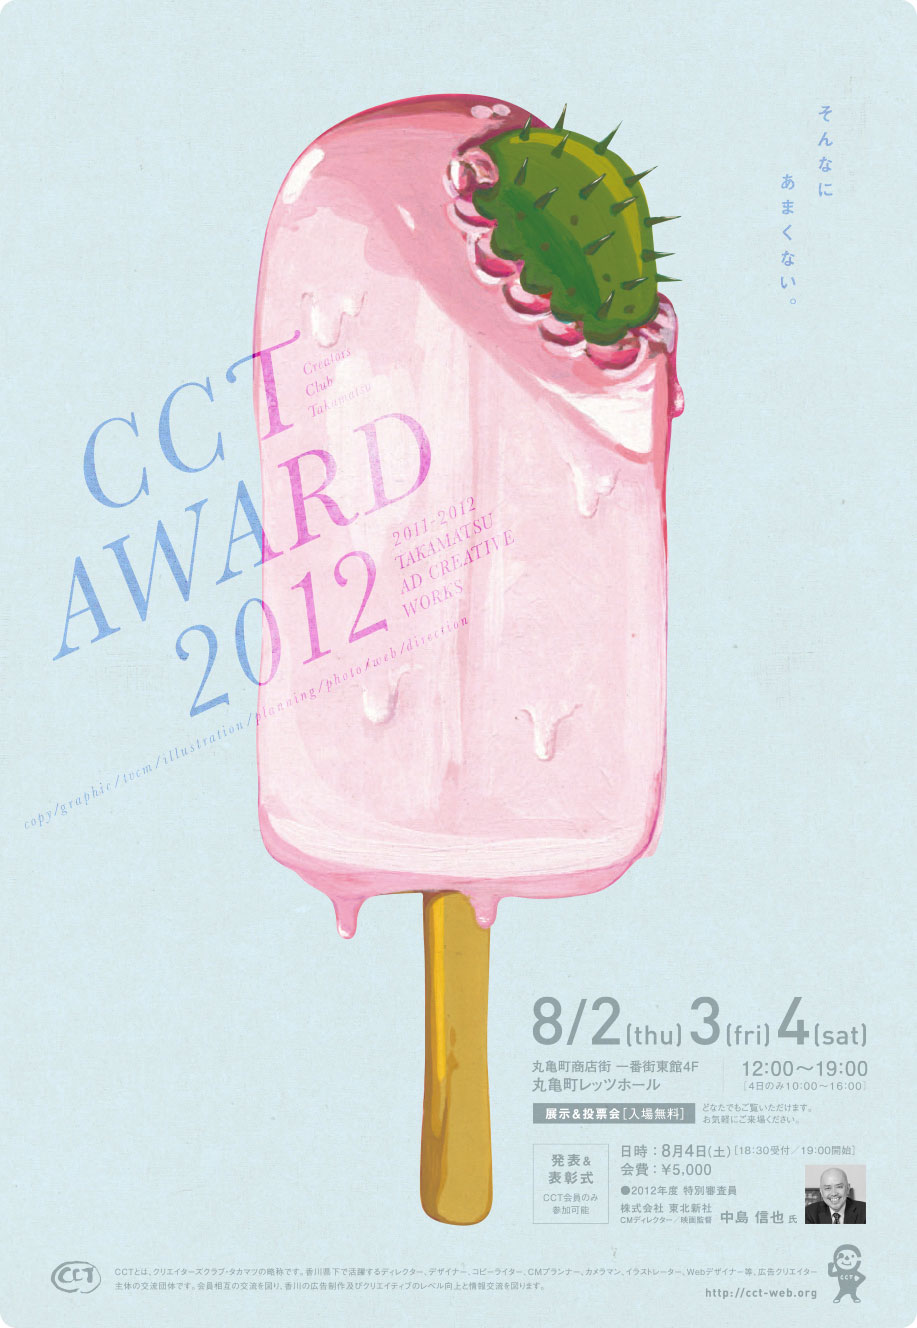 CCT AWARD 2012